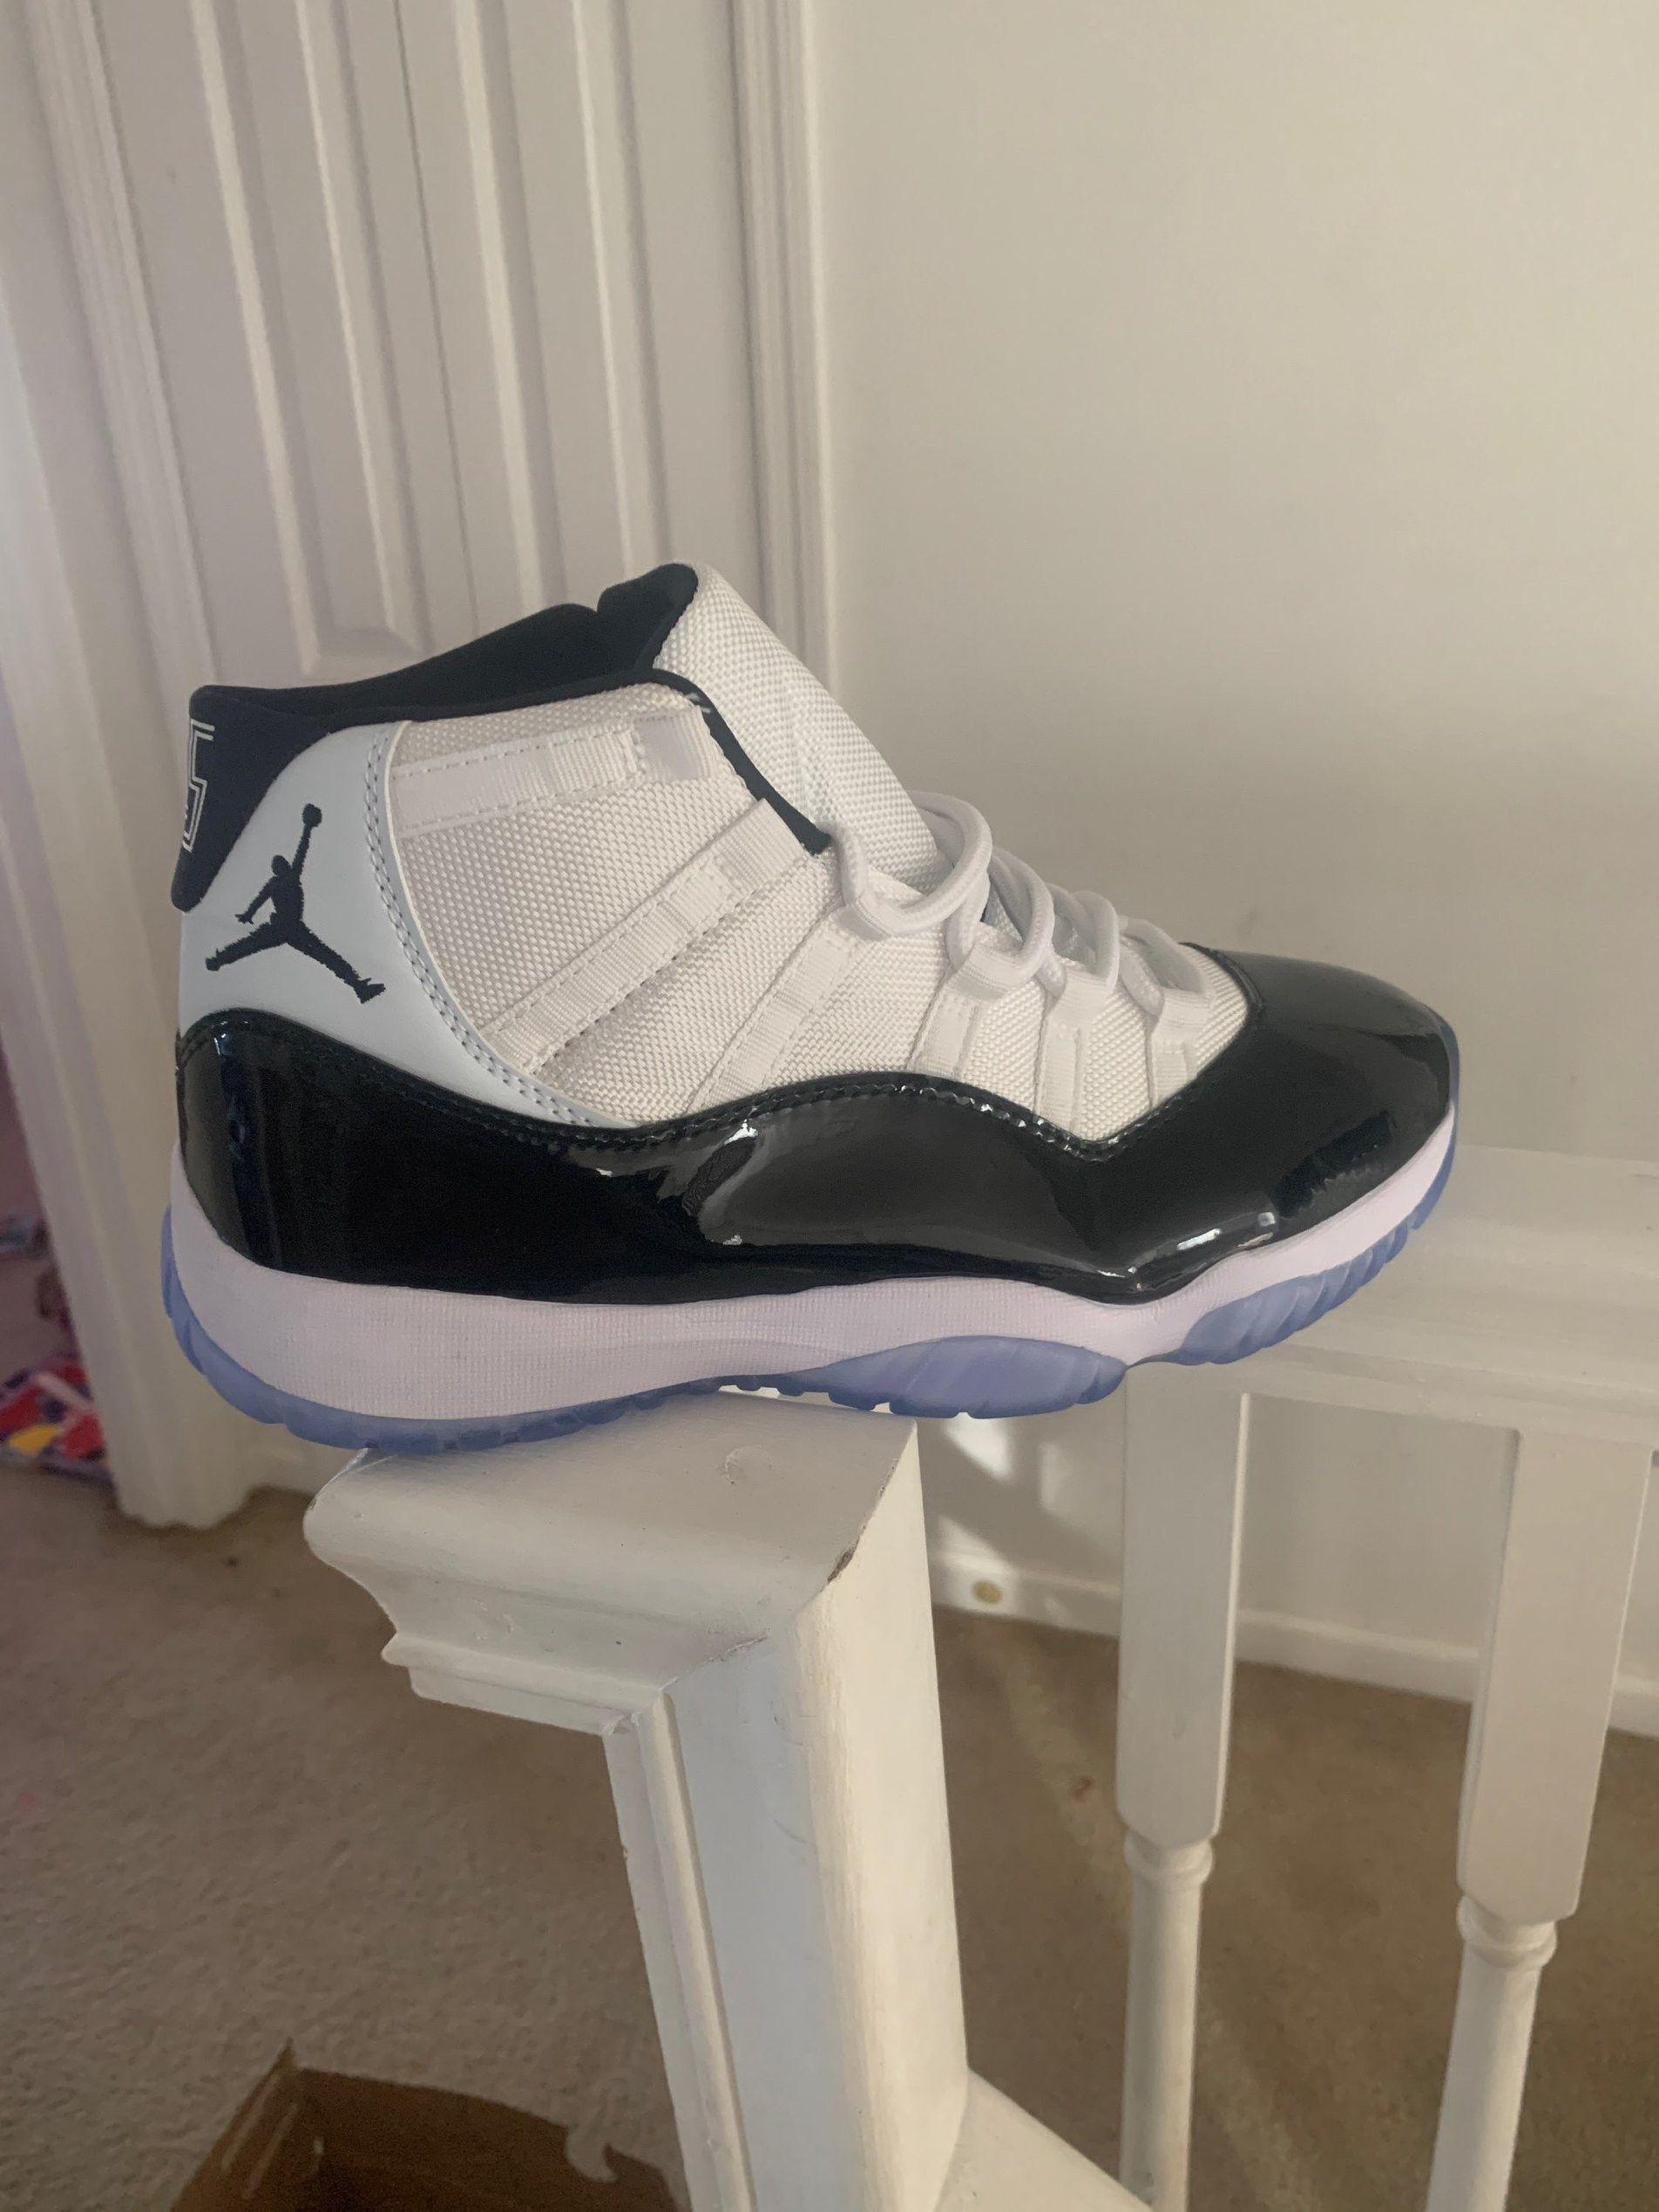 Jordan 11 Retros ( Size 9.5 )